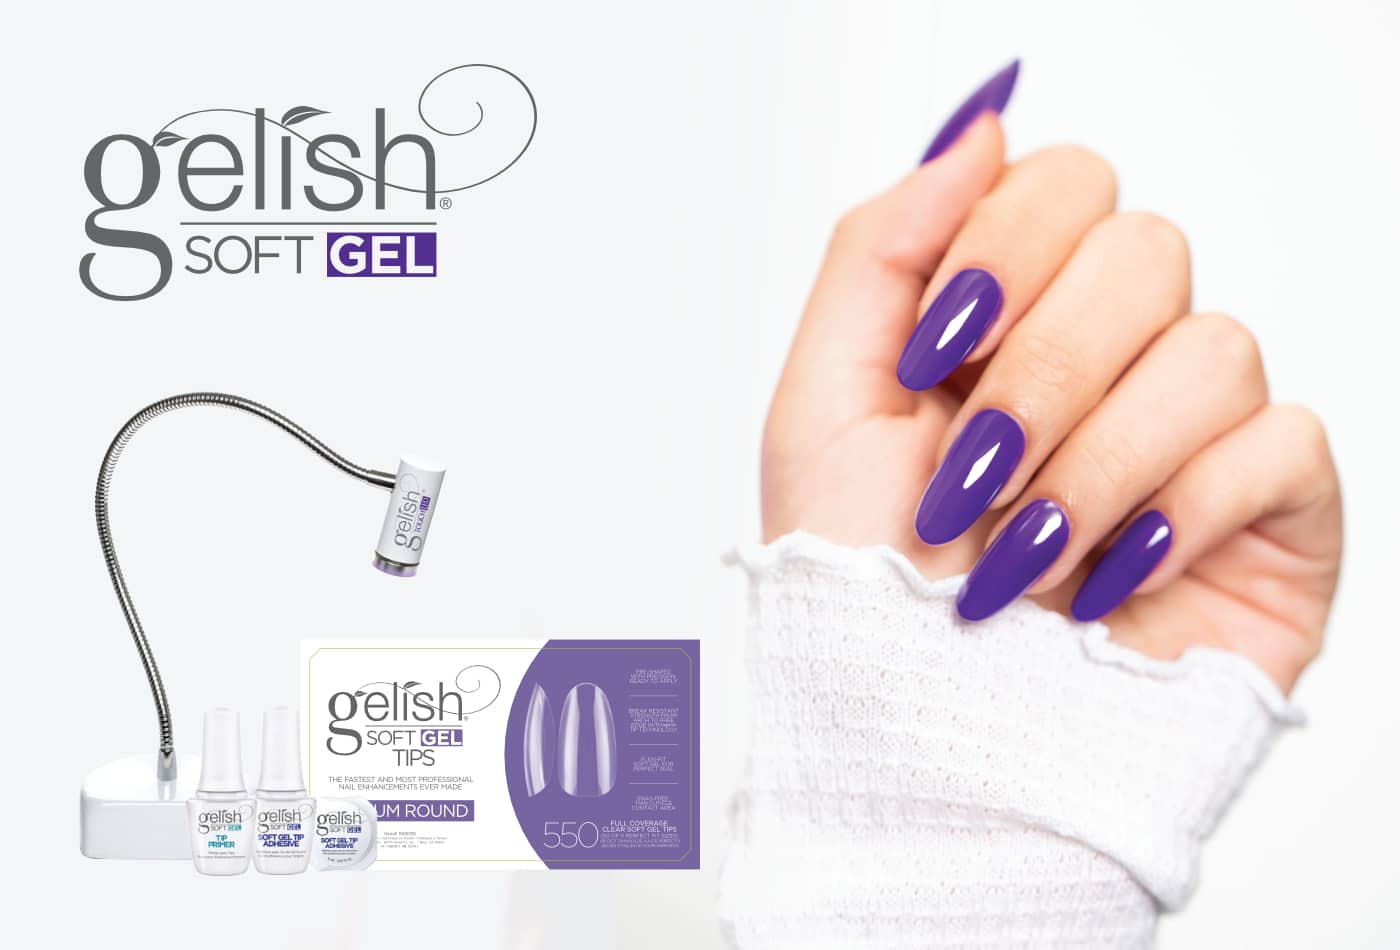 Gelish Soft Gel ju mundeson sherbim te plote ne vetem 20 minuta | Duo Cosmetics